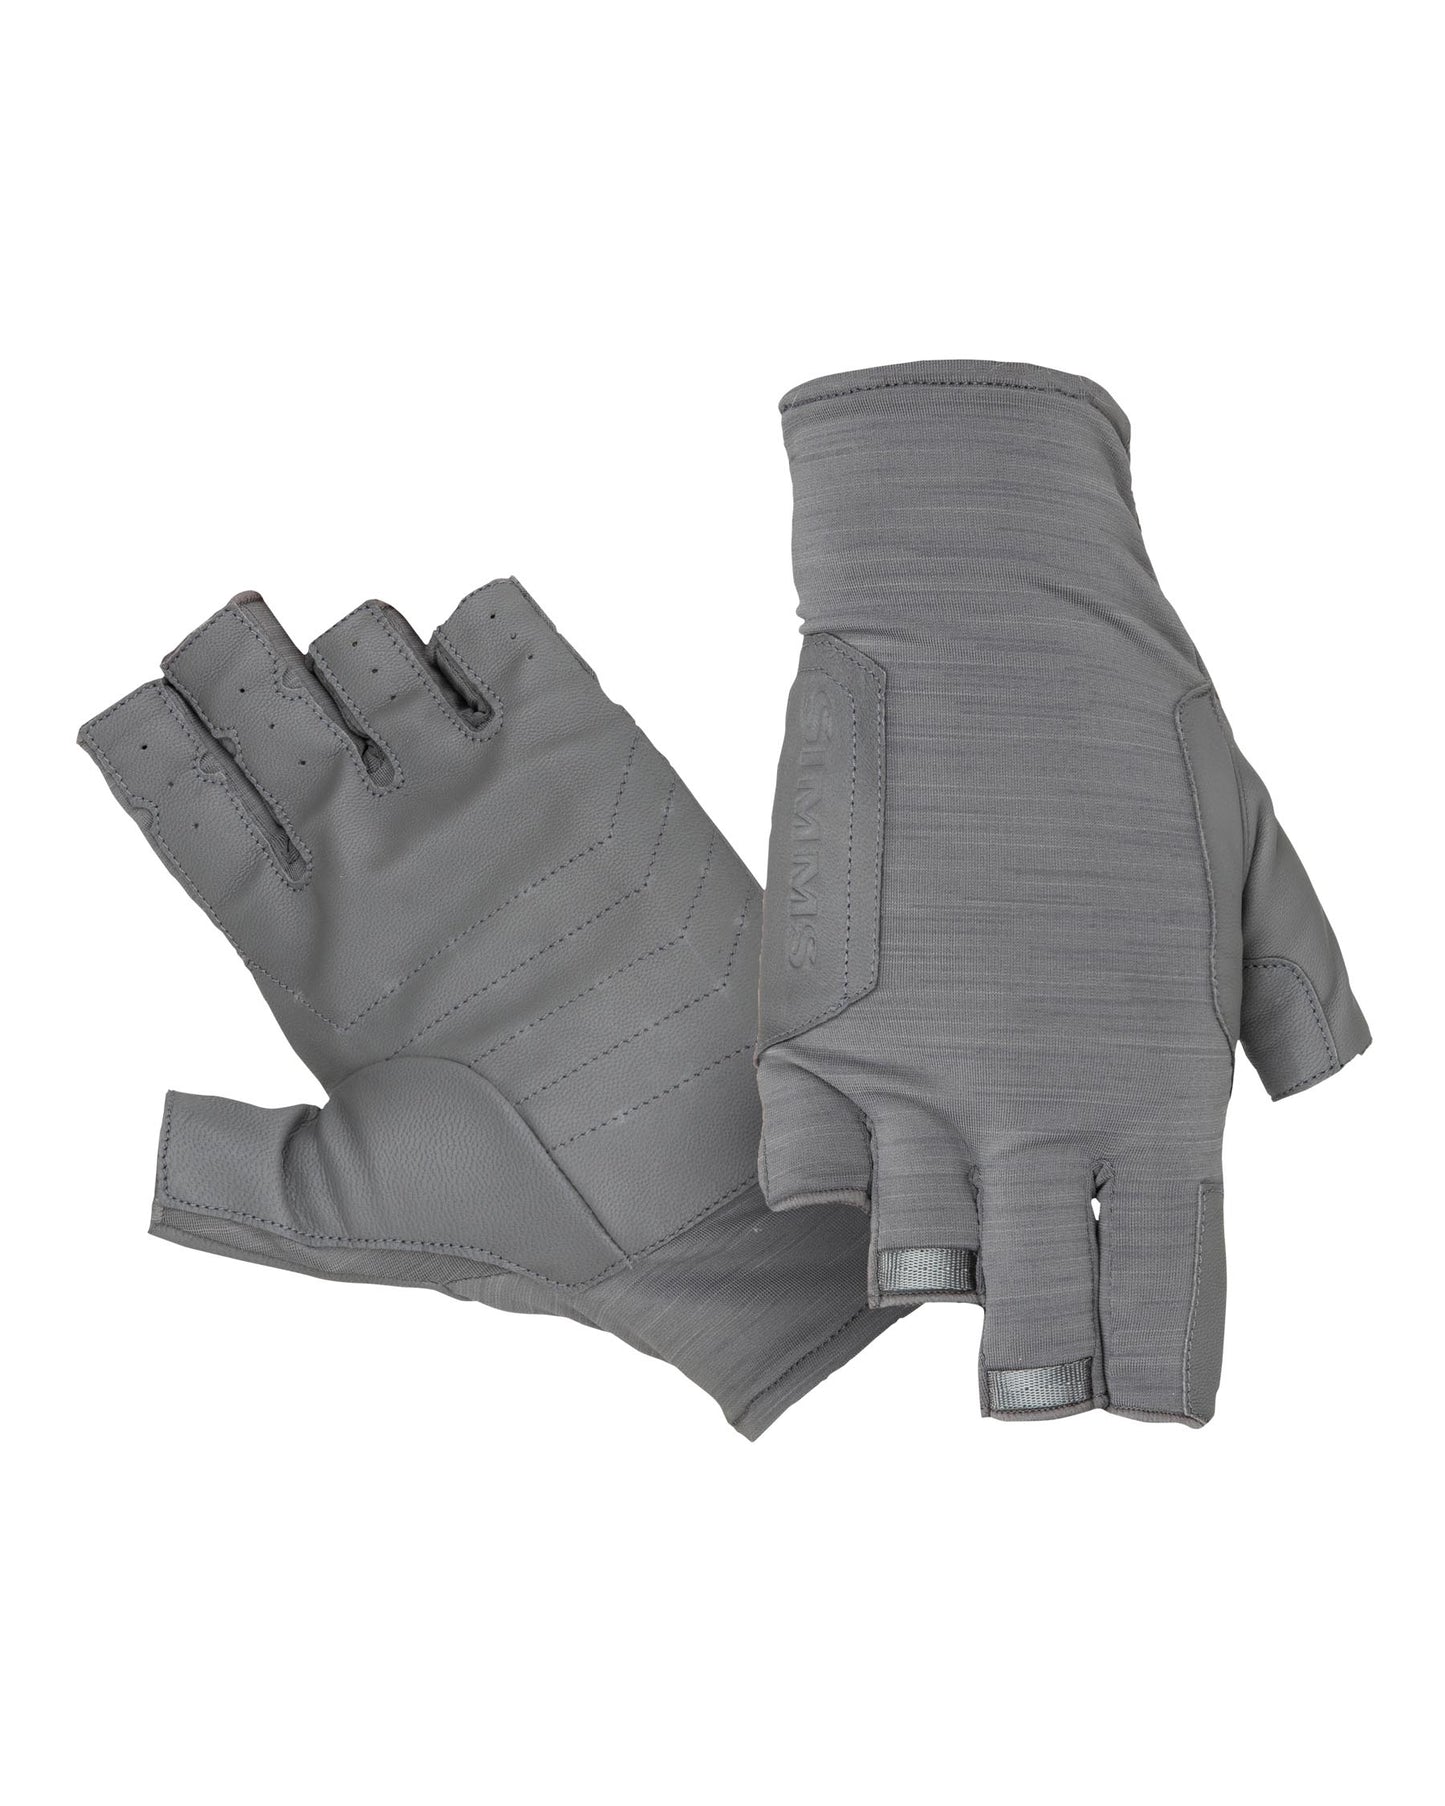 Simms Solarflex Guide Glove - Sterling - S